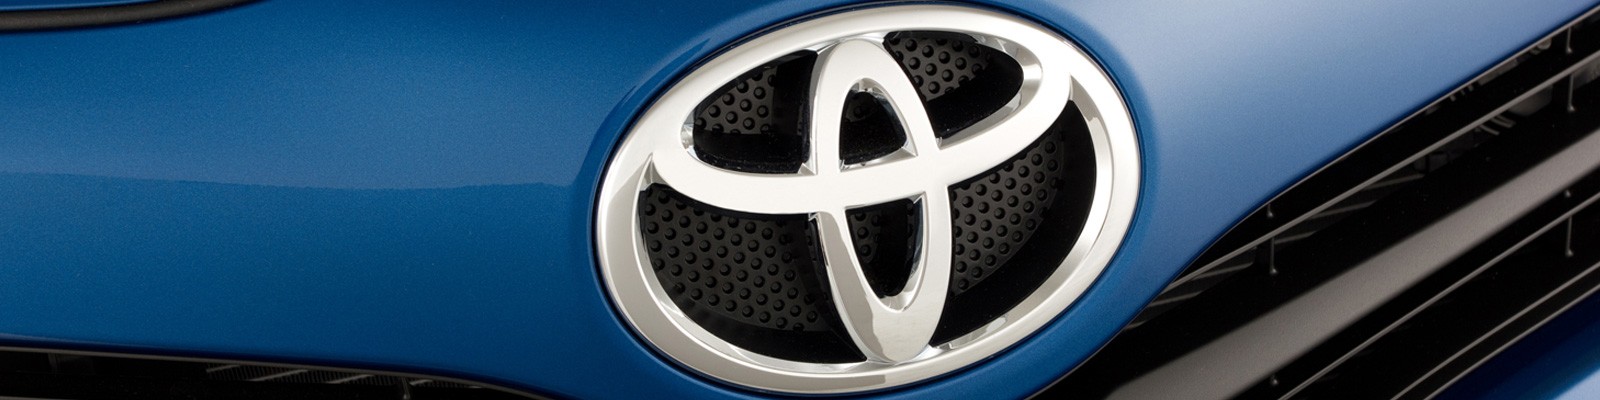 Toyota Vehicle Accessories